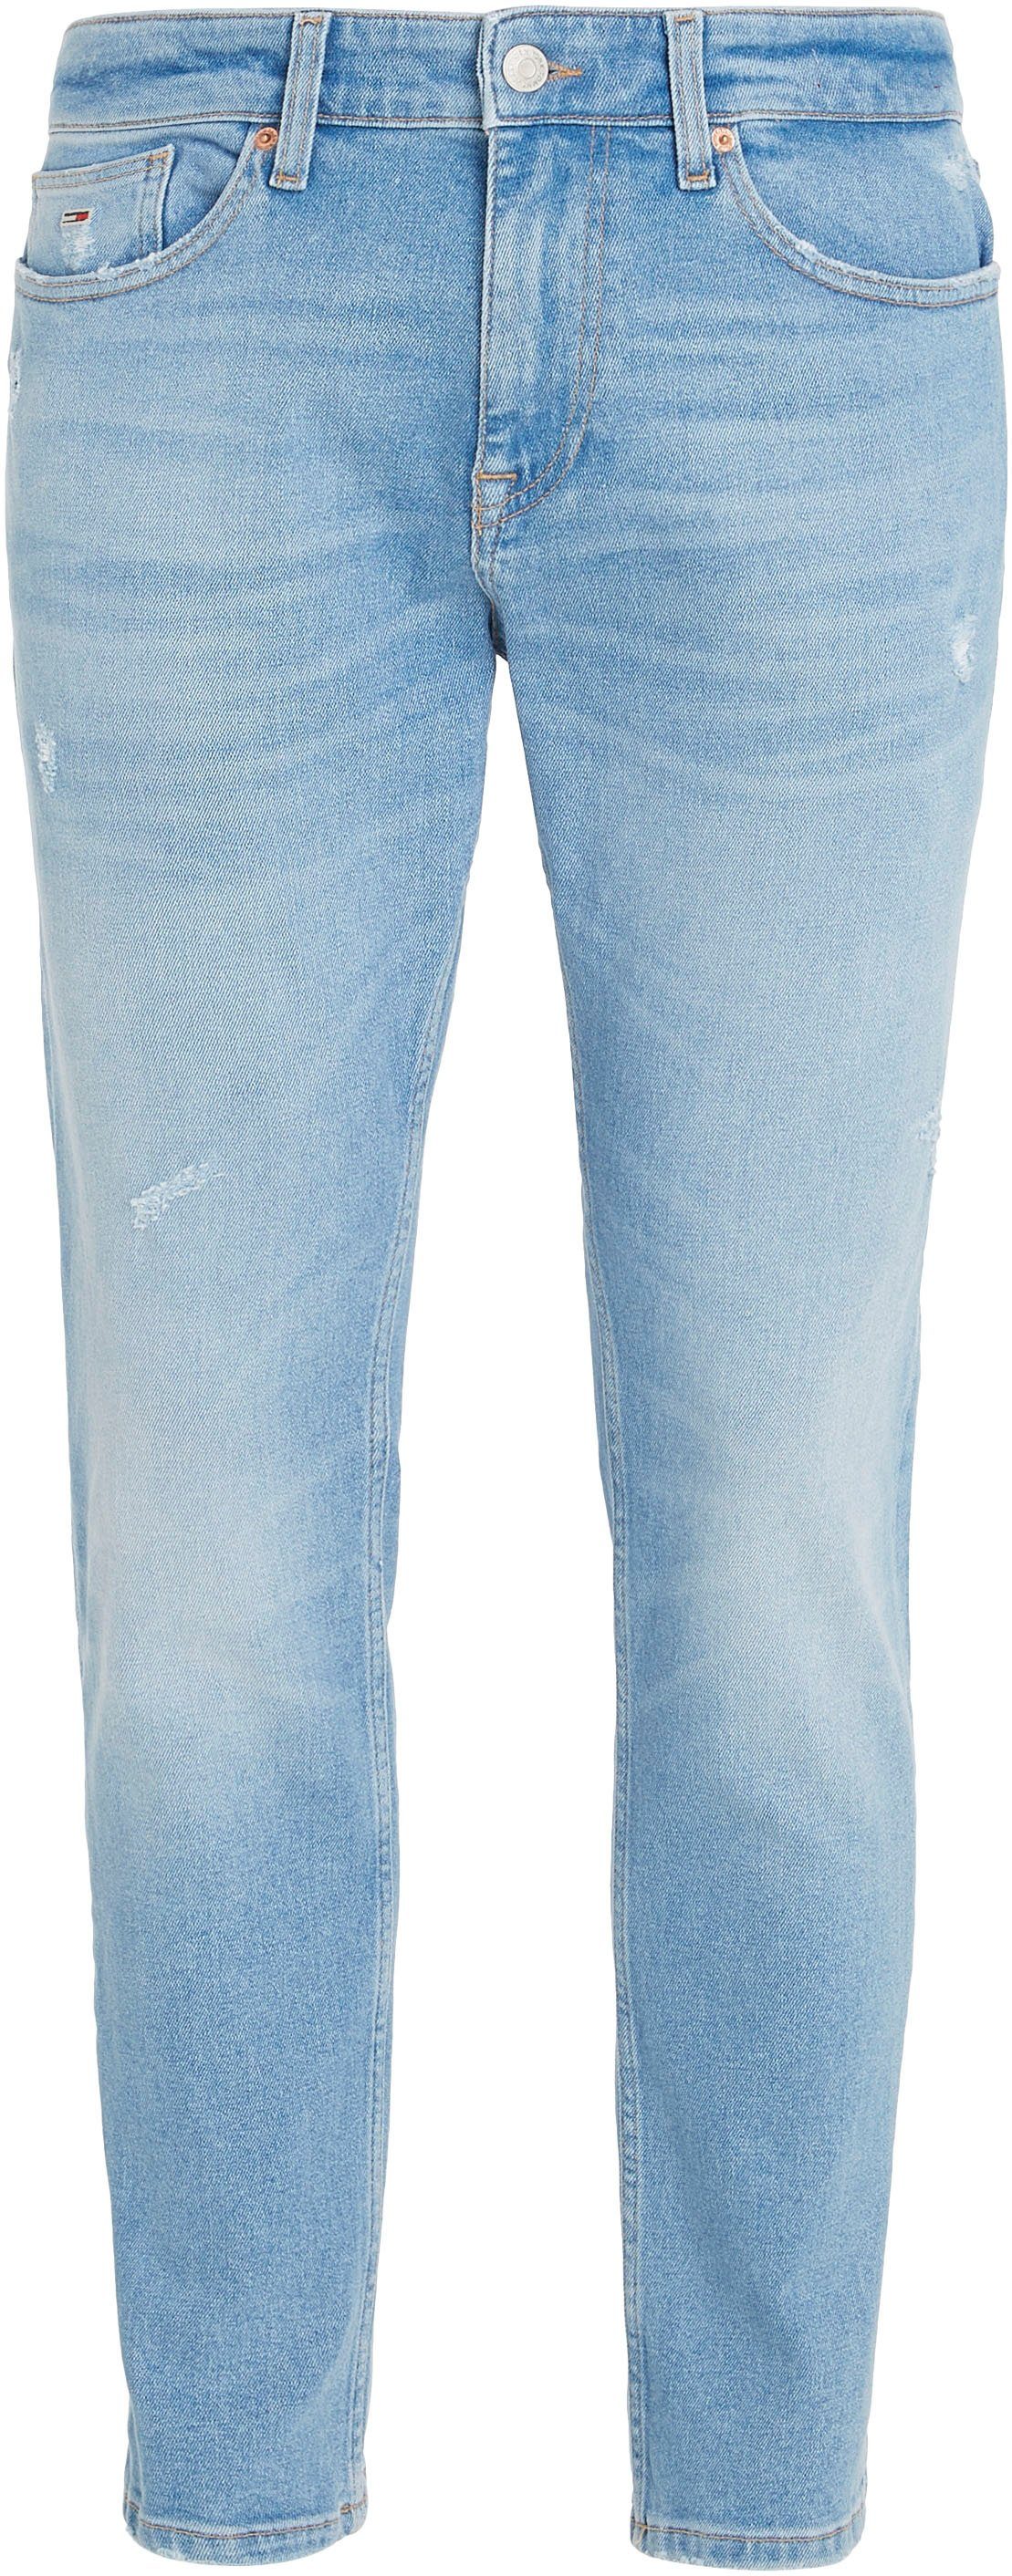 mit AUSTIN SLIM DenimLight Markenlabel BG7114 Jeans Slim-fit-Jeans TPRD Tommy